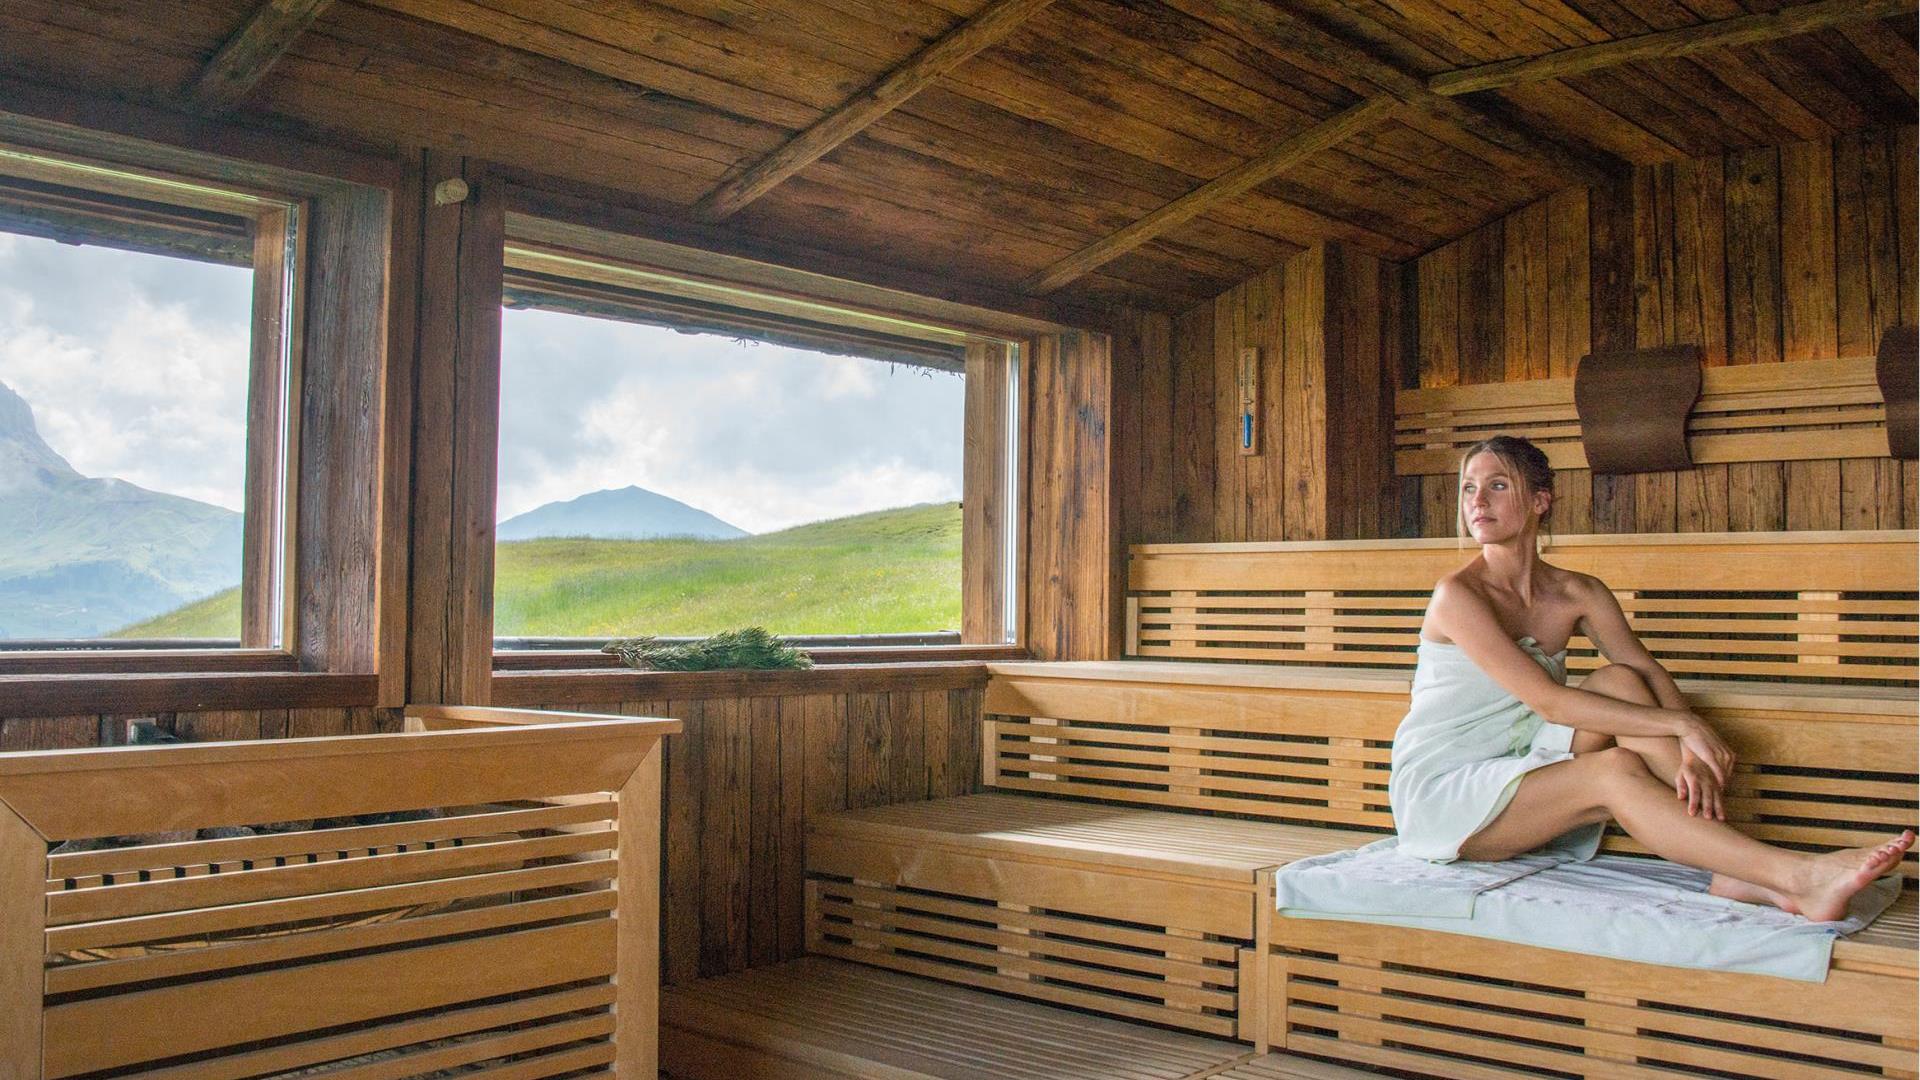 Relativ Denken Schulter sauna - my-mindtrip.de